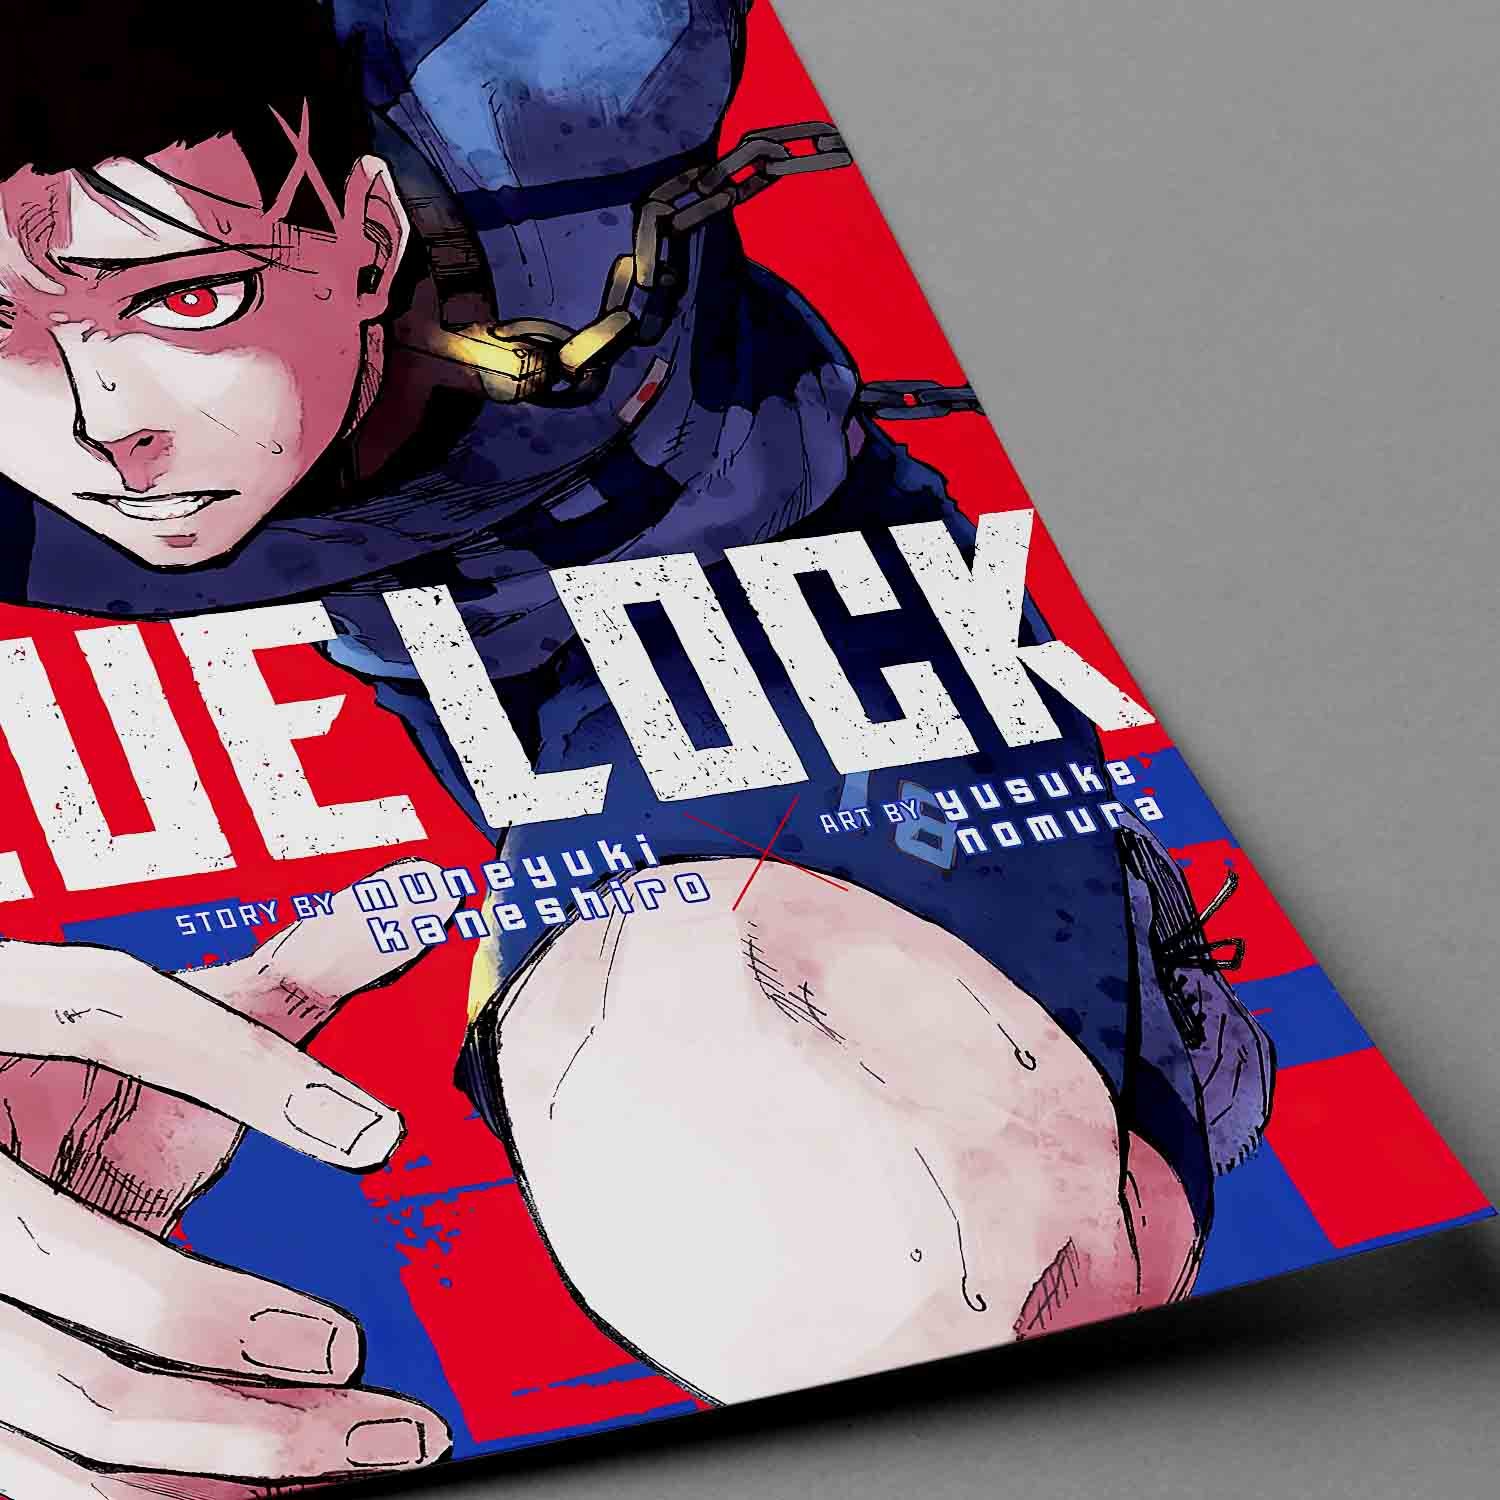 Blue Lock Manga Volume 7